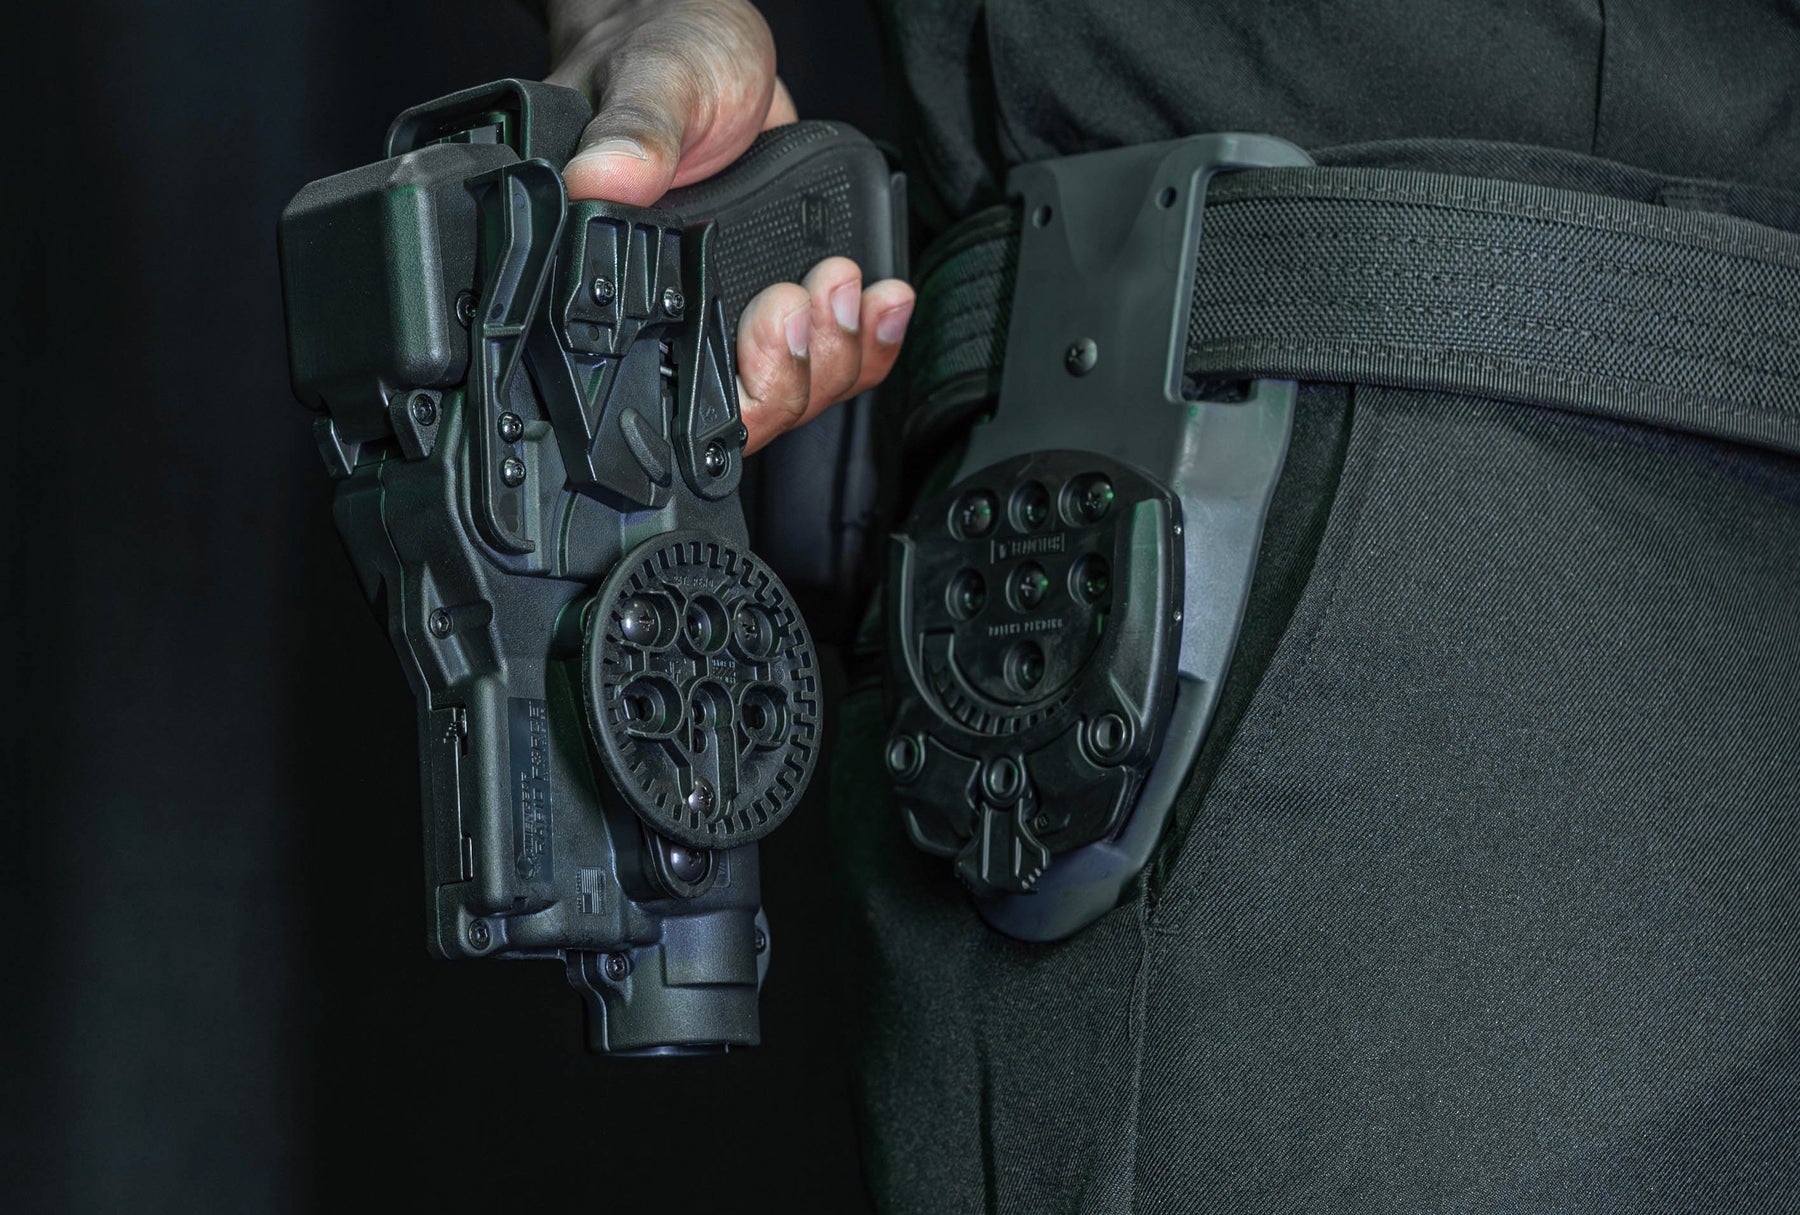 Leg Strap Adaptor Kit Firearm Carry Solution: G-Code Holsters